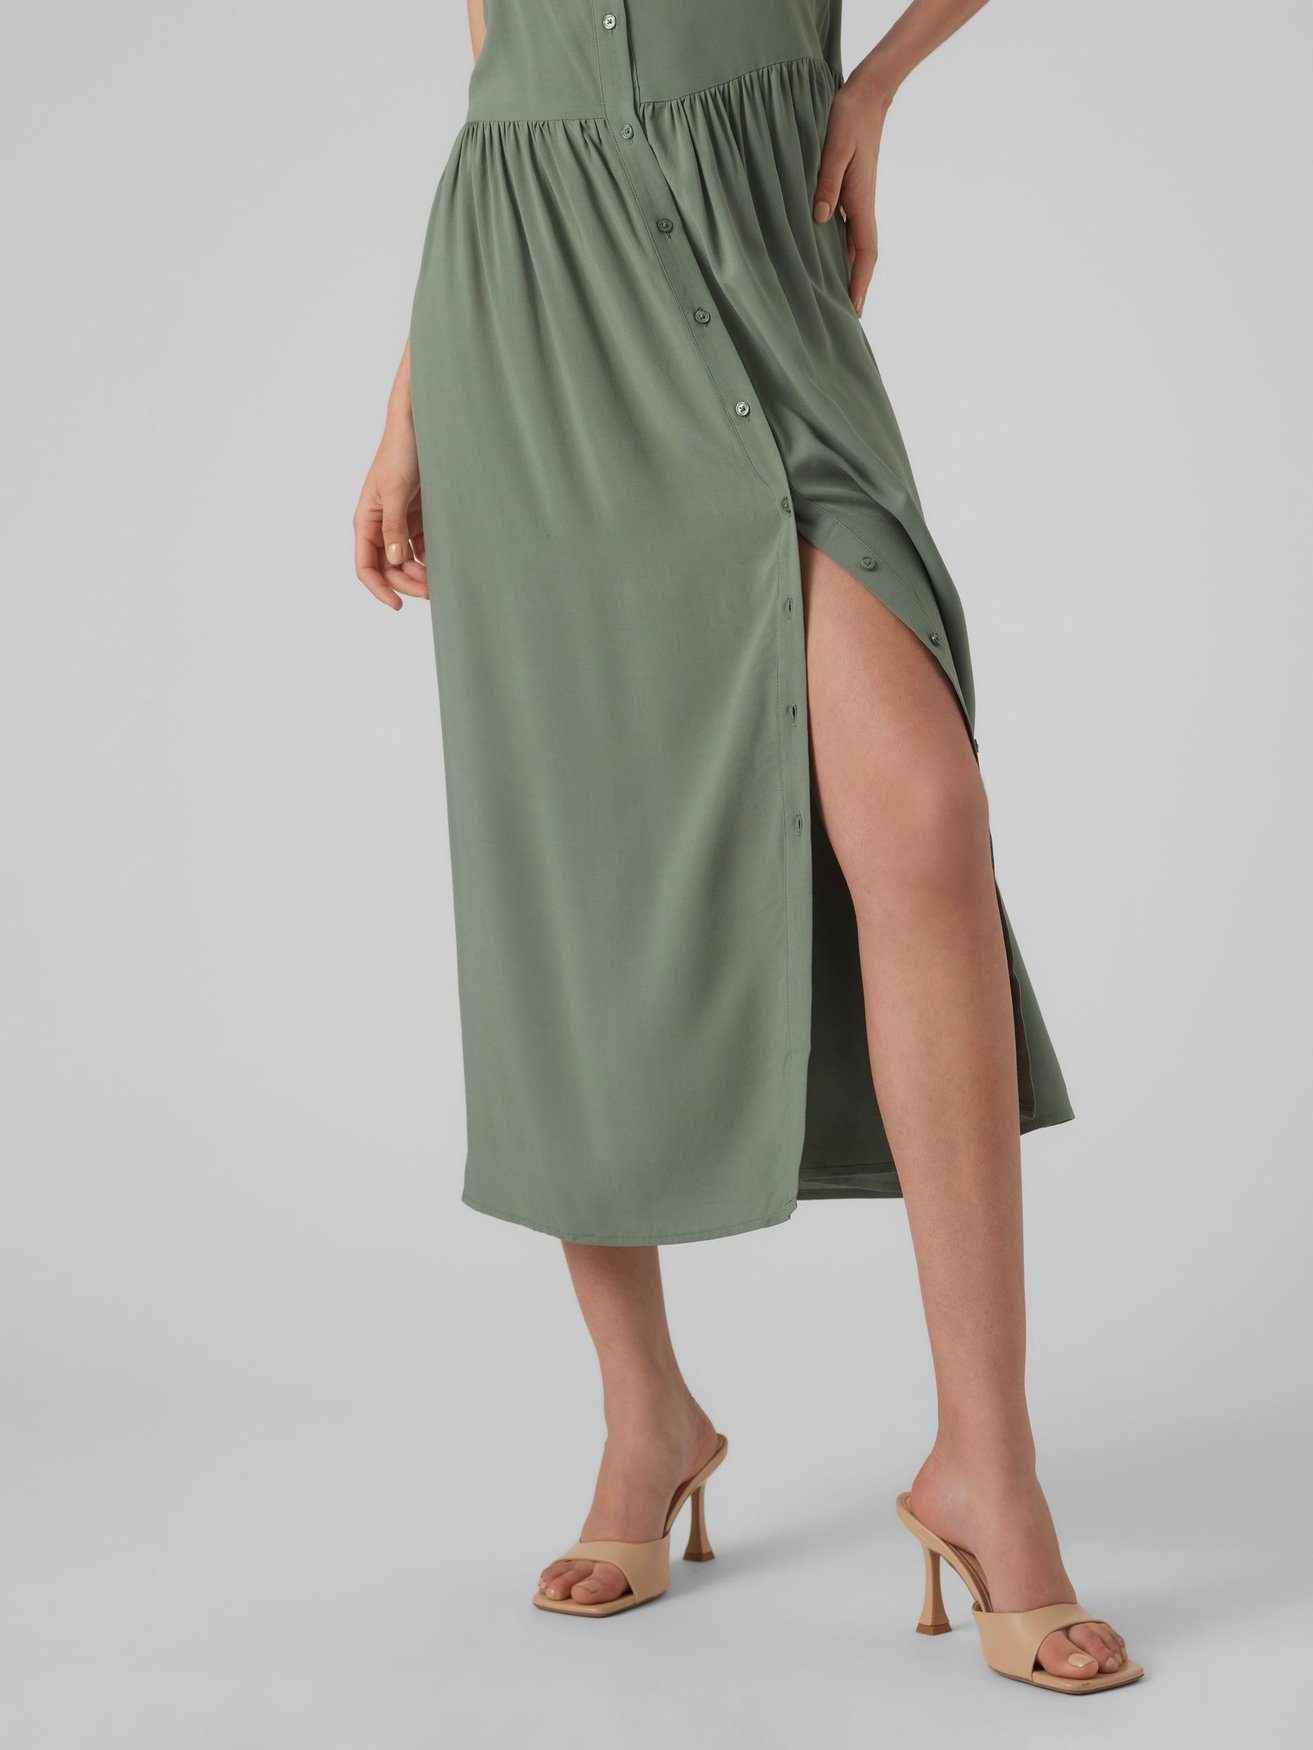 5763 Ärmelloses Grün-2 Kleid in Basic Shirtkleid Langes (lang) Moda Vero VMALBA